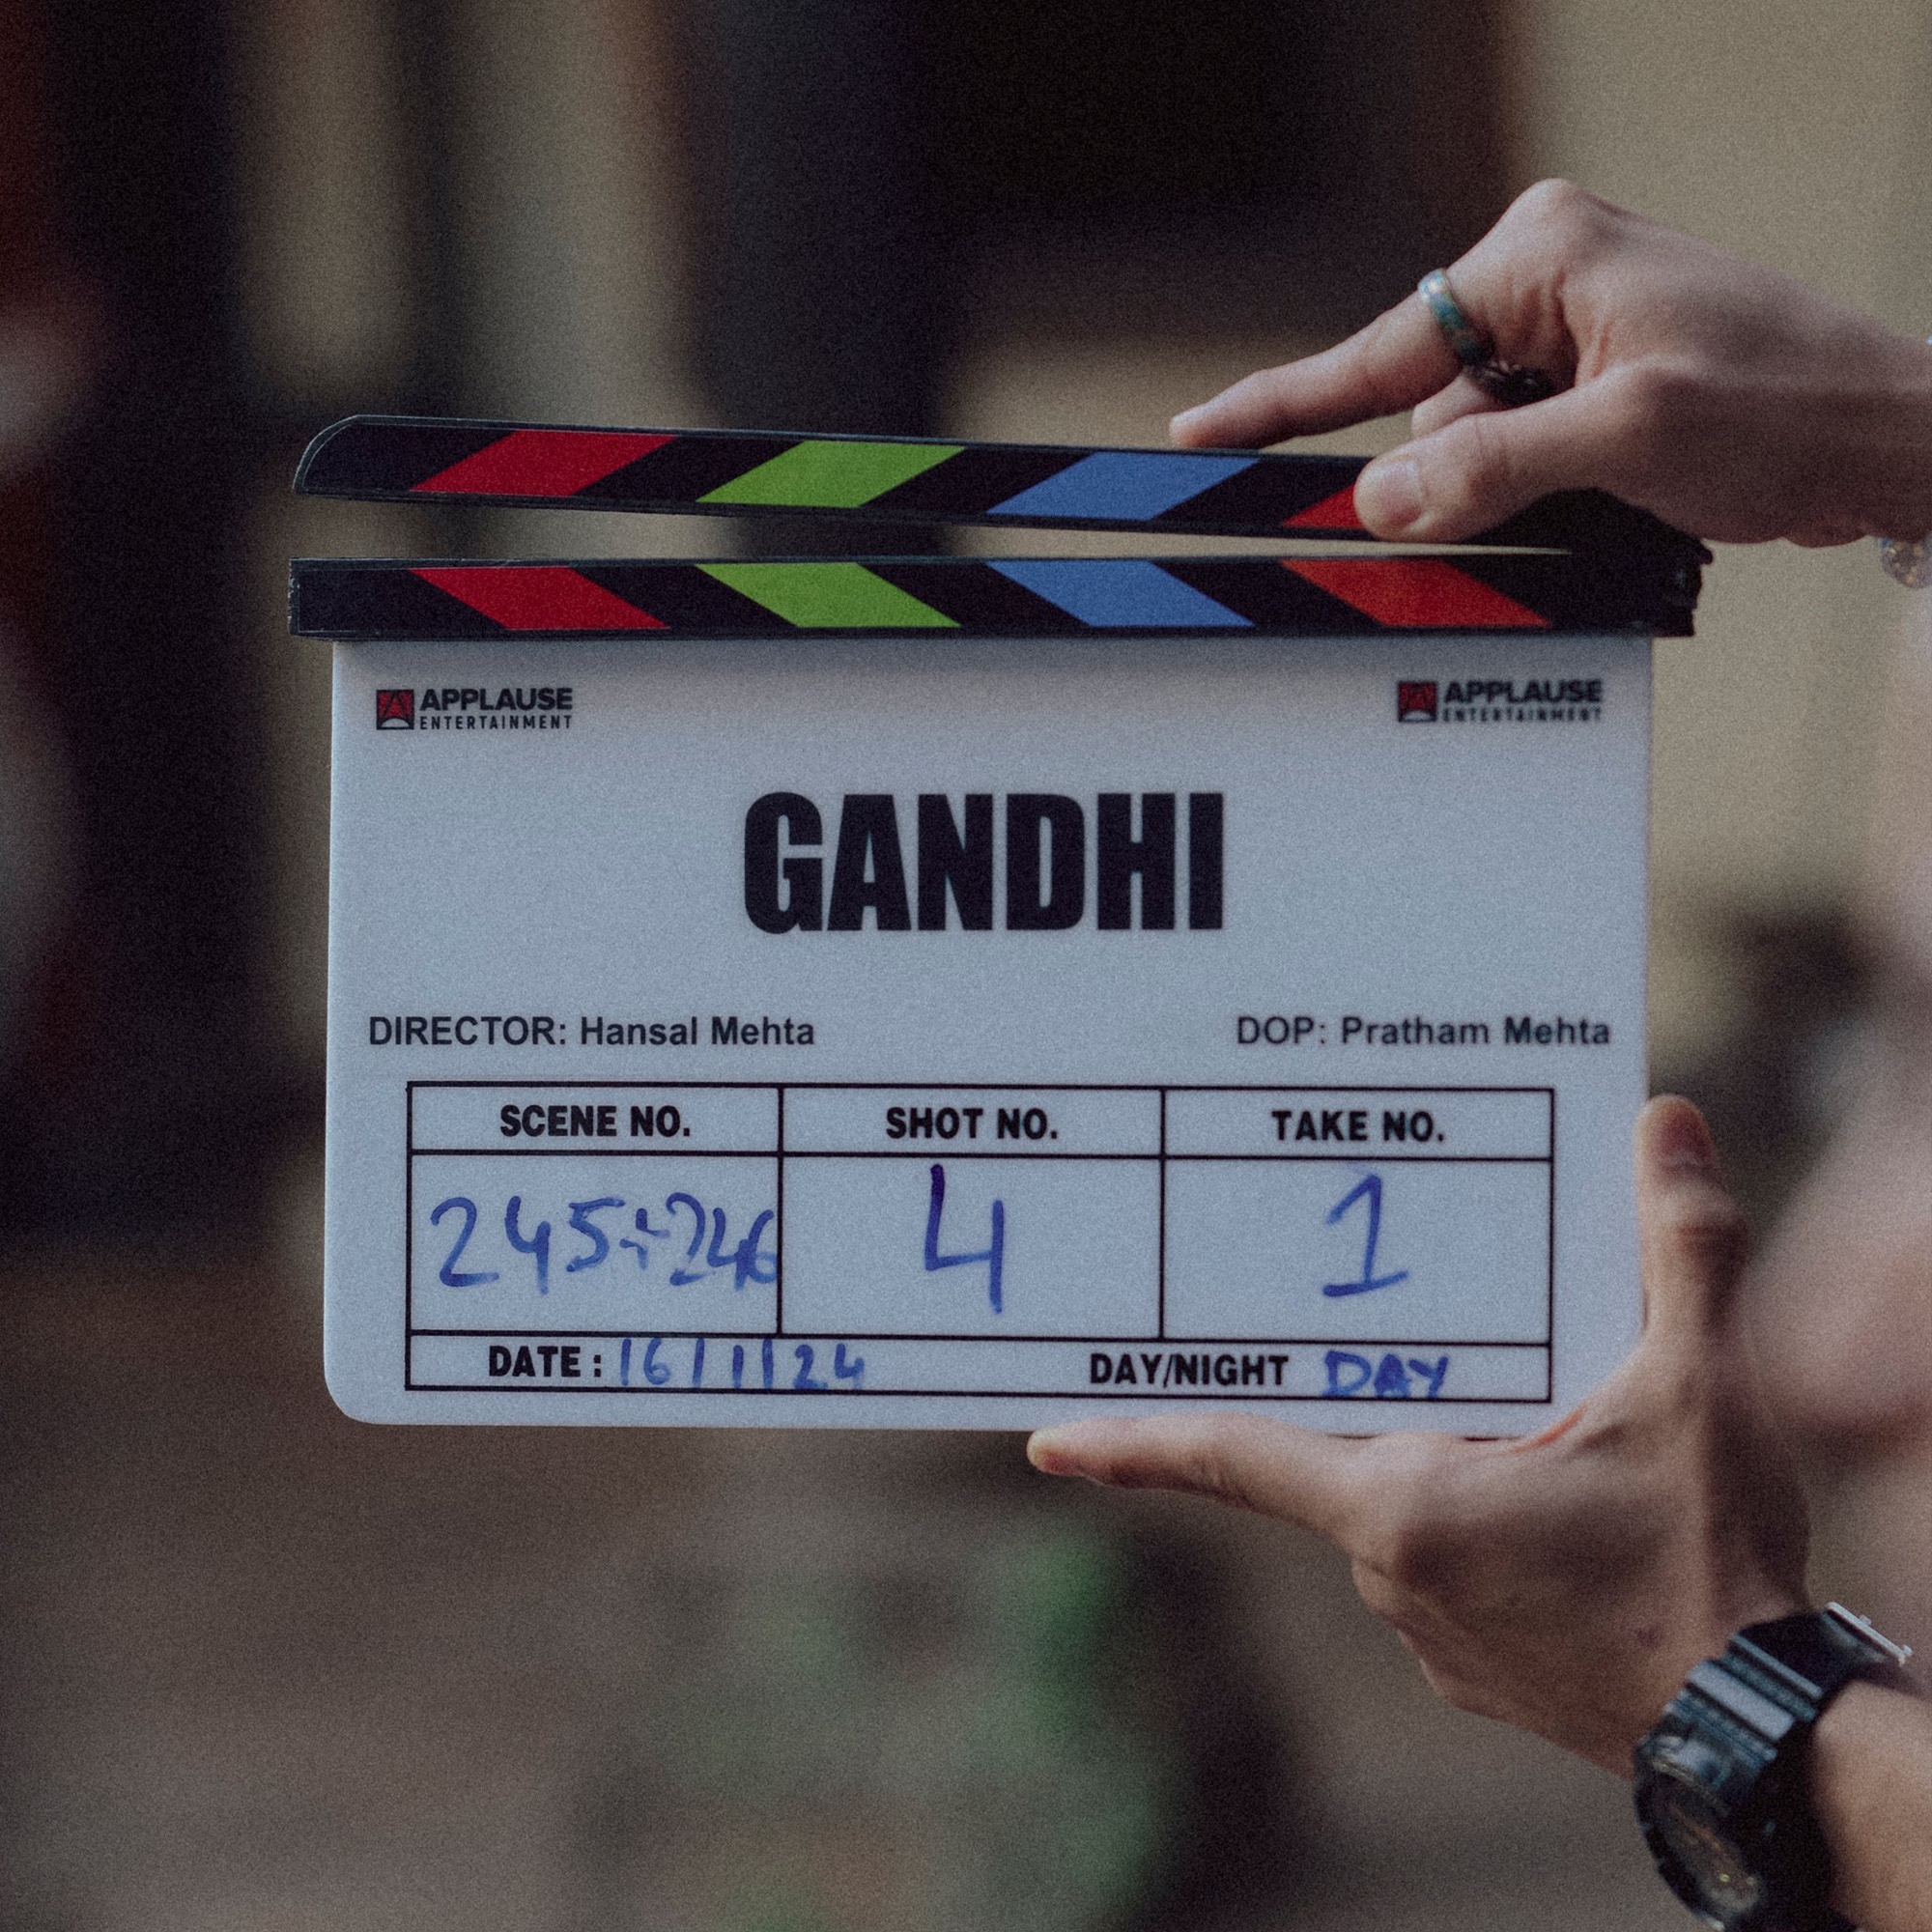 Gandhi in works: Hansal Mehta to direct a web series on Mahatma Gandhi’s life